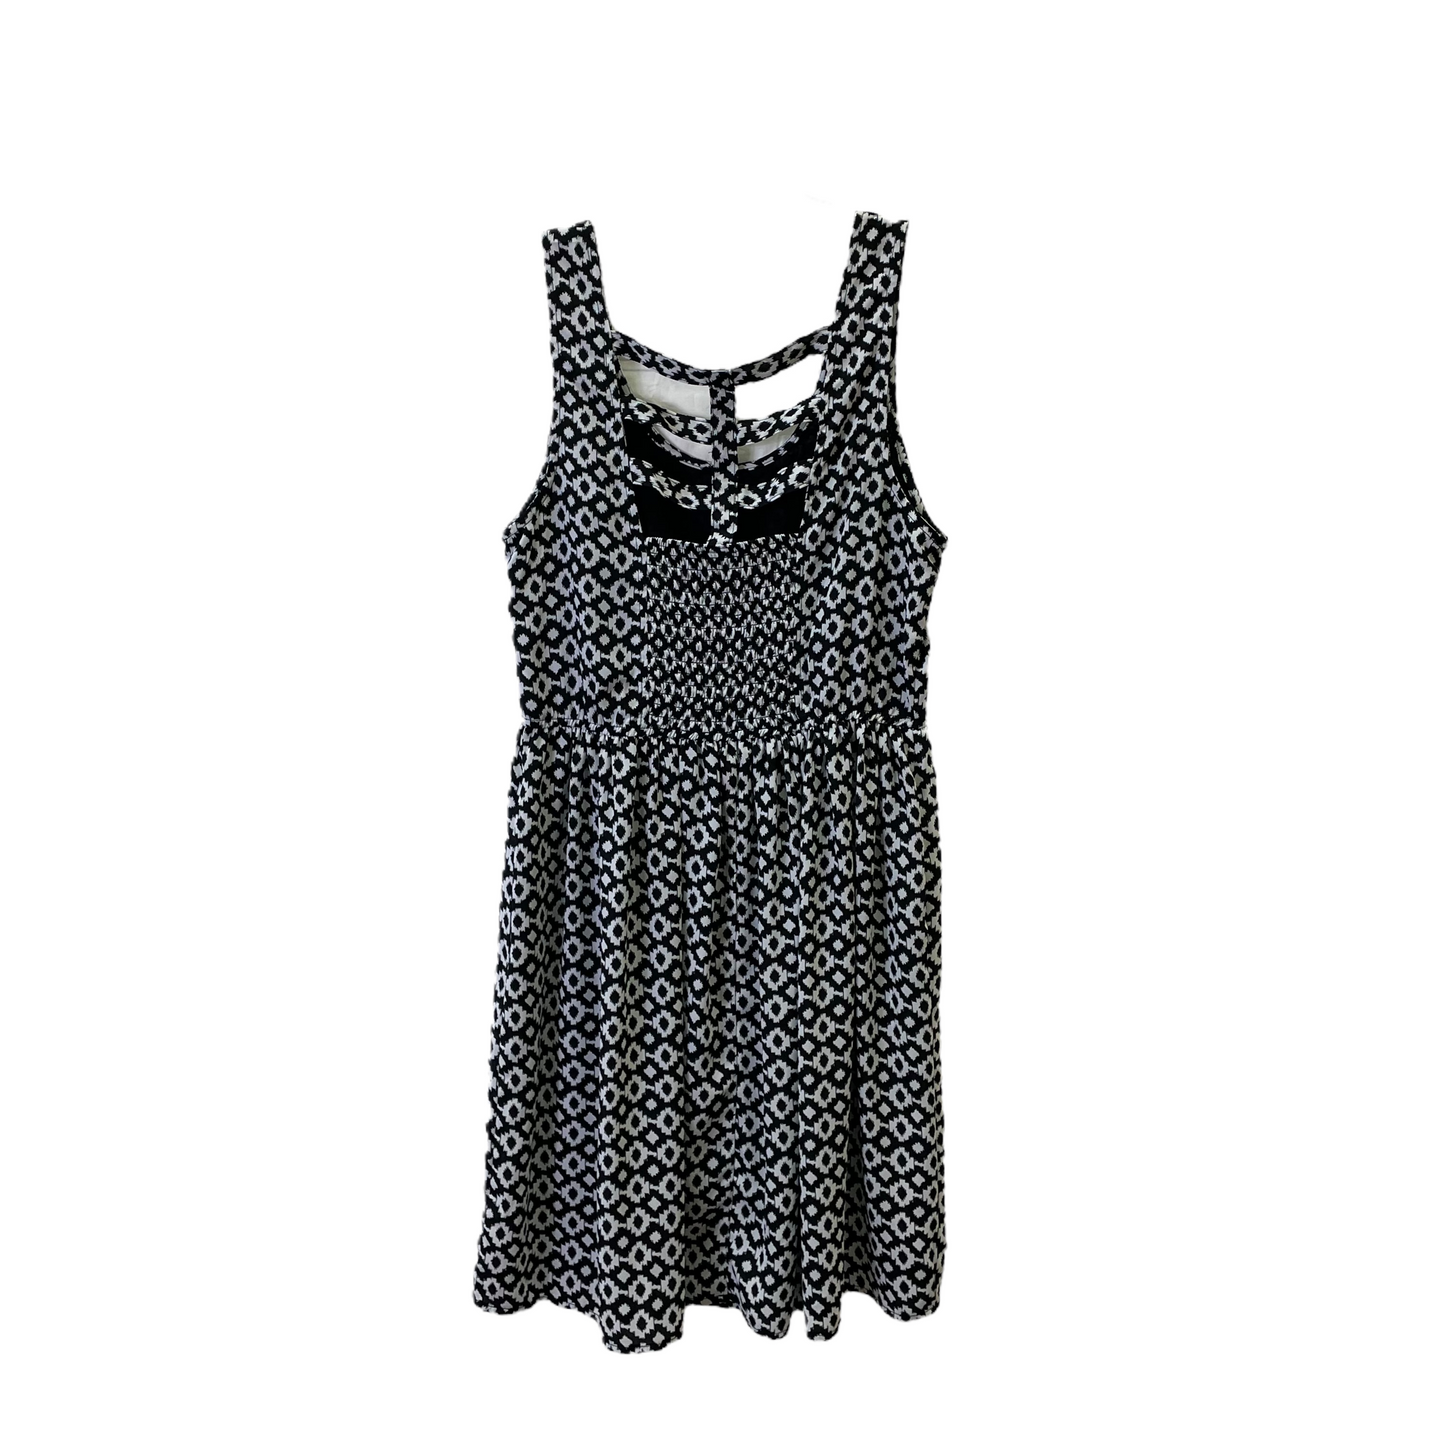 Black & White Dress Casual Short By Xhilaration, Size: S